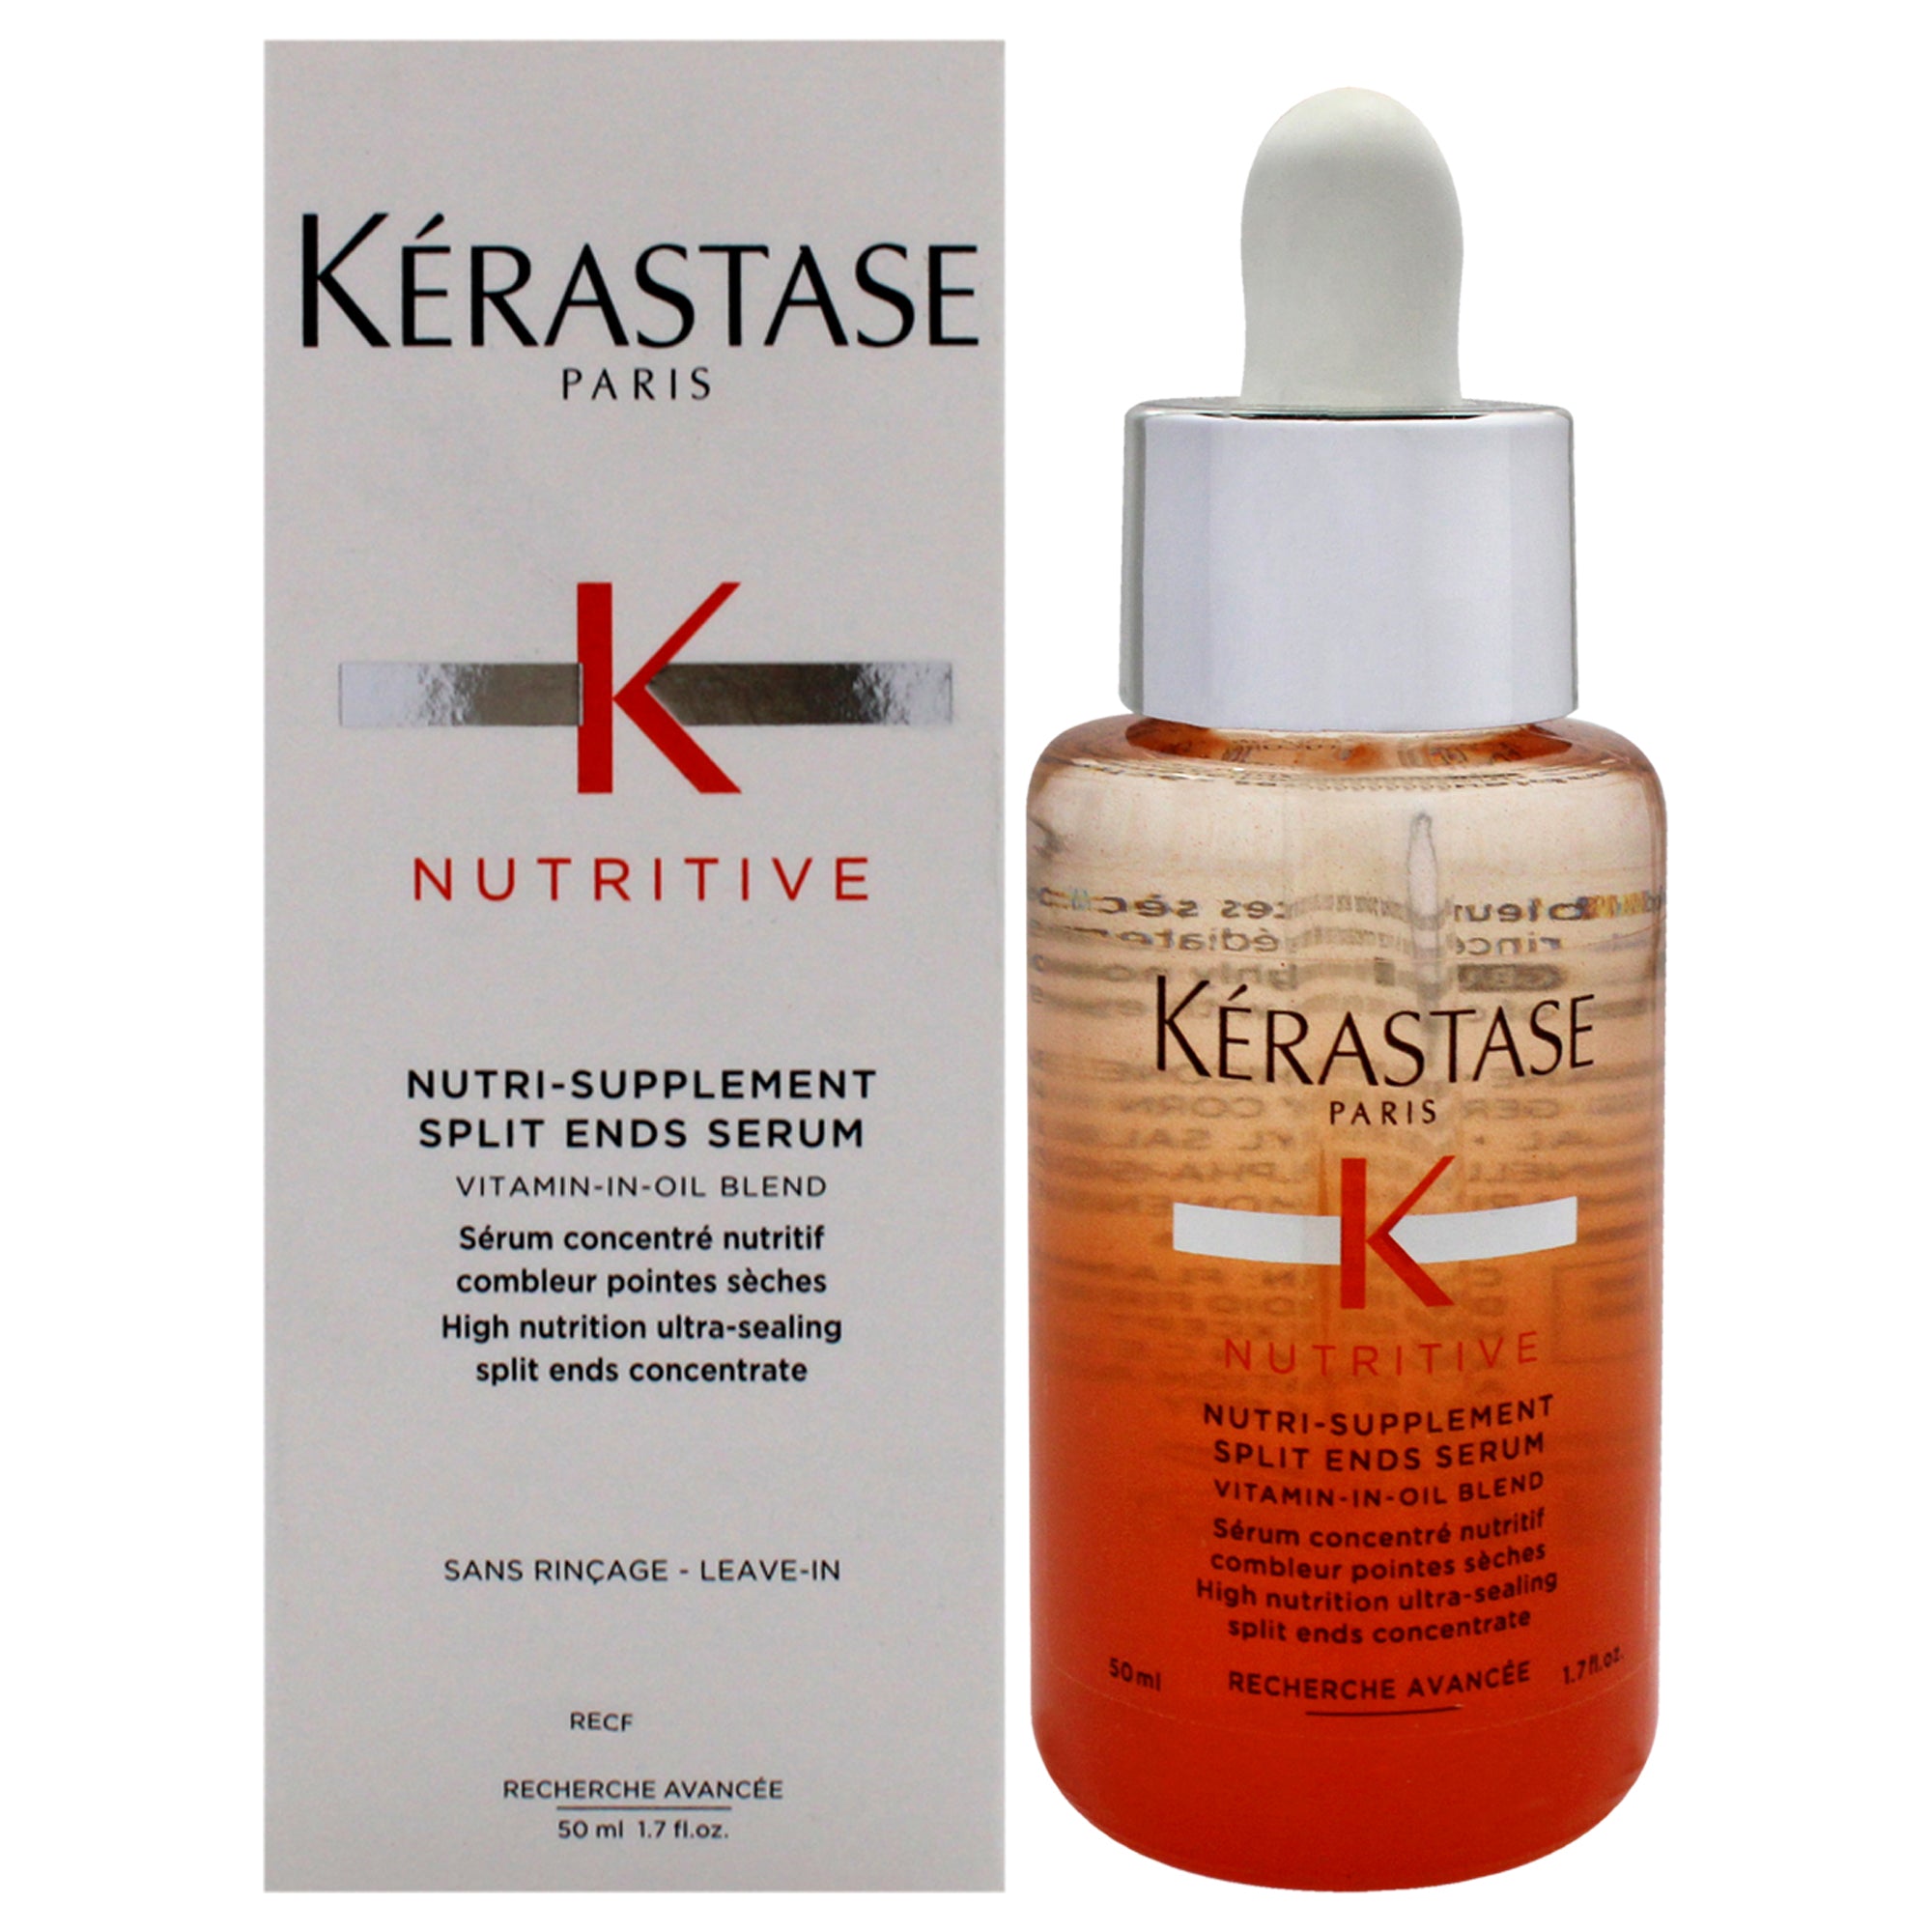 Kerastase Nutritive Nutri-supplement Split Ends Serum By  For Unisex - 1.7 oz Serum In White